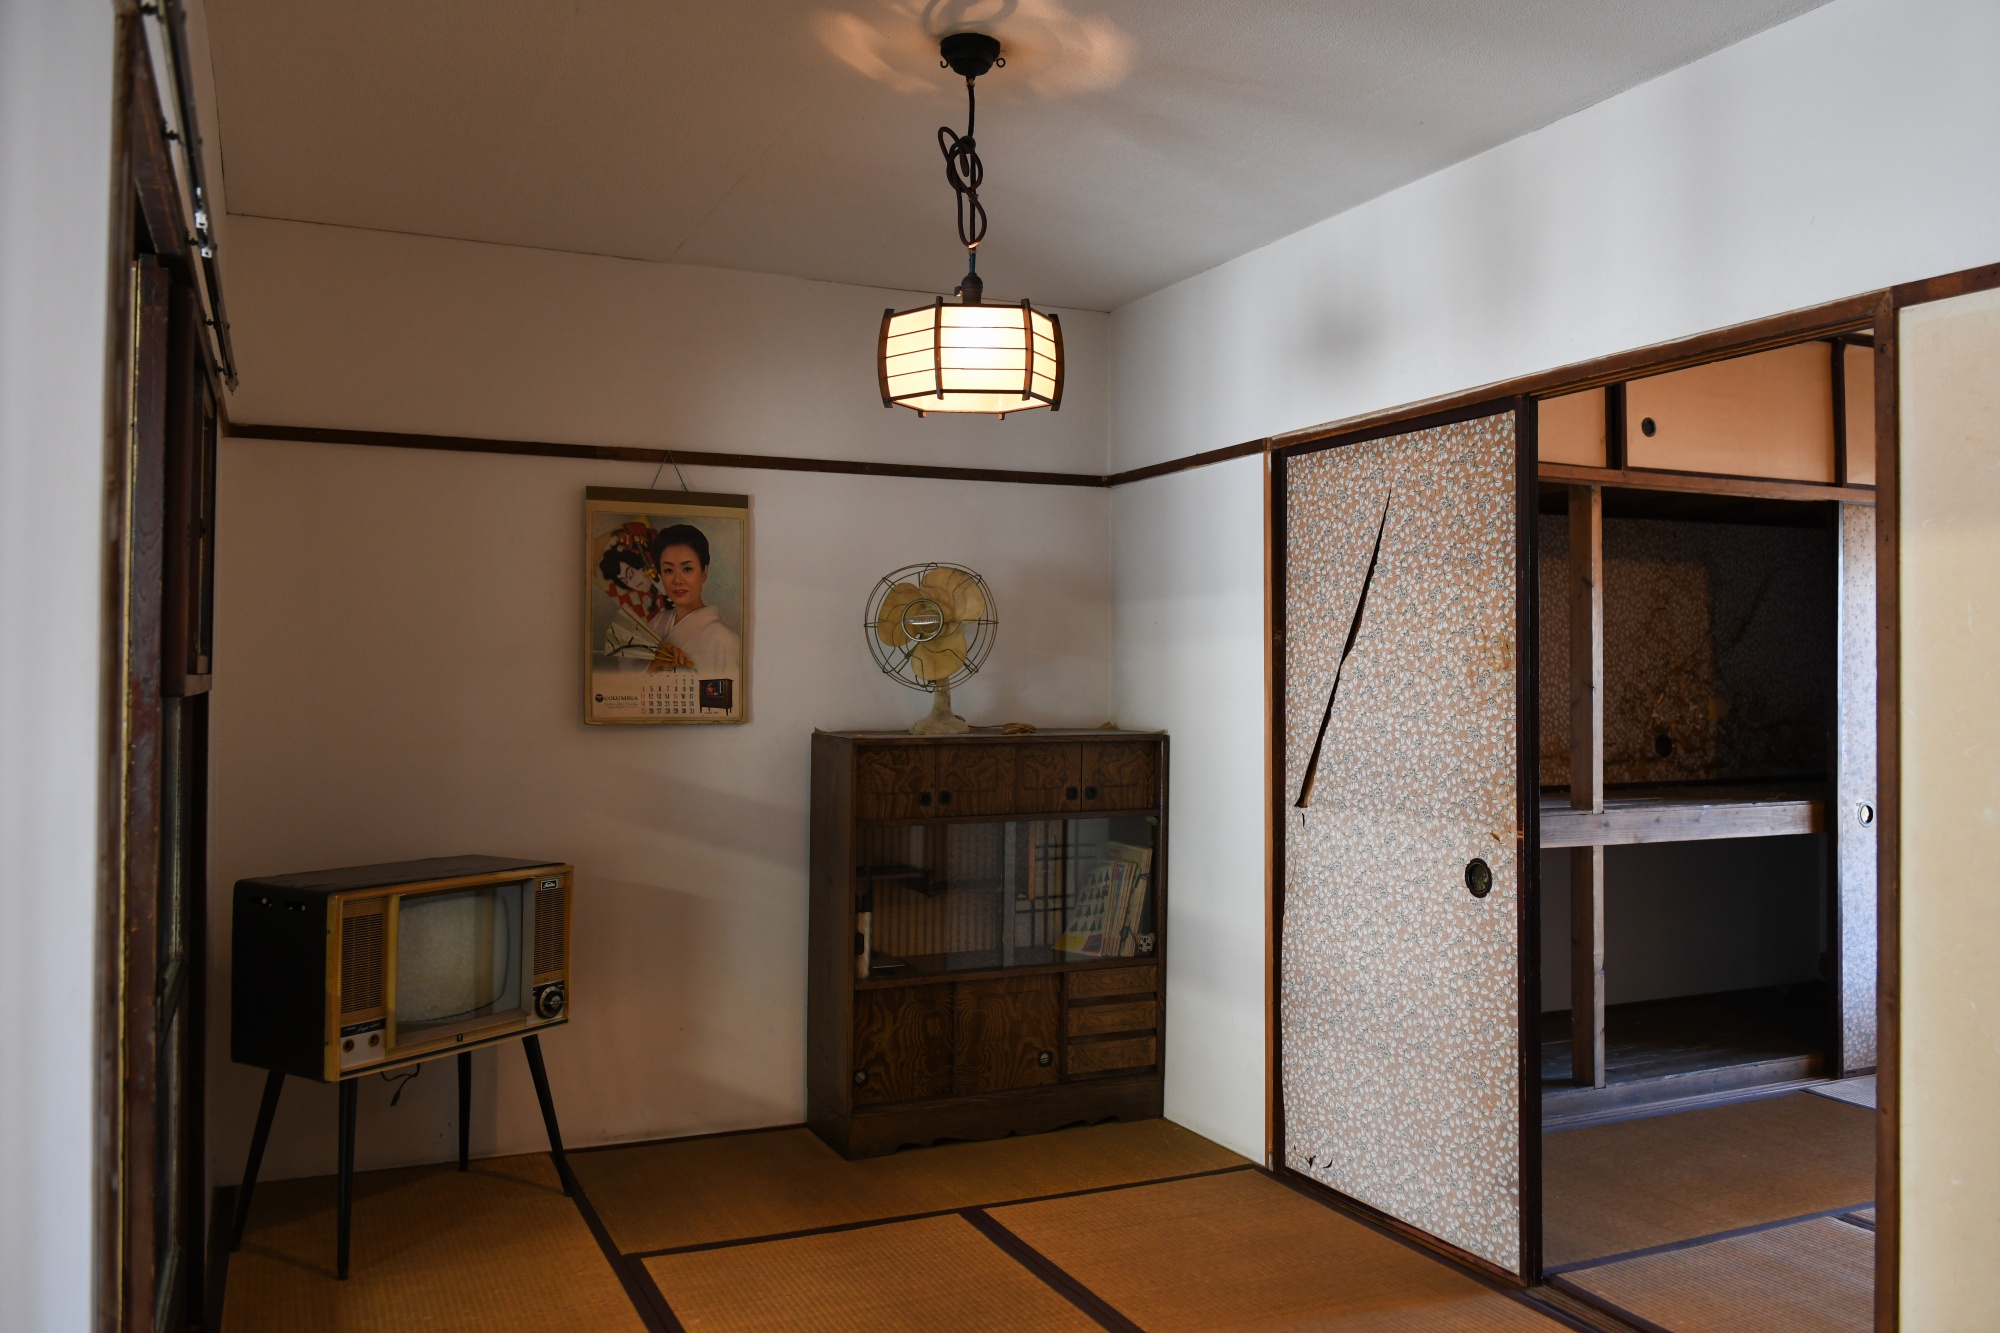 Work exchange in Japan: Live in 100-year-old Japanese heritage hou